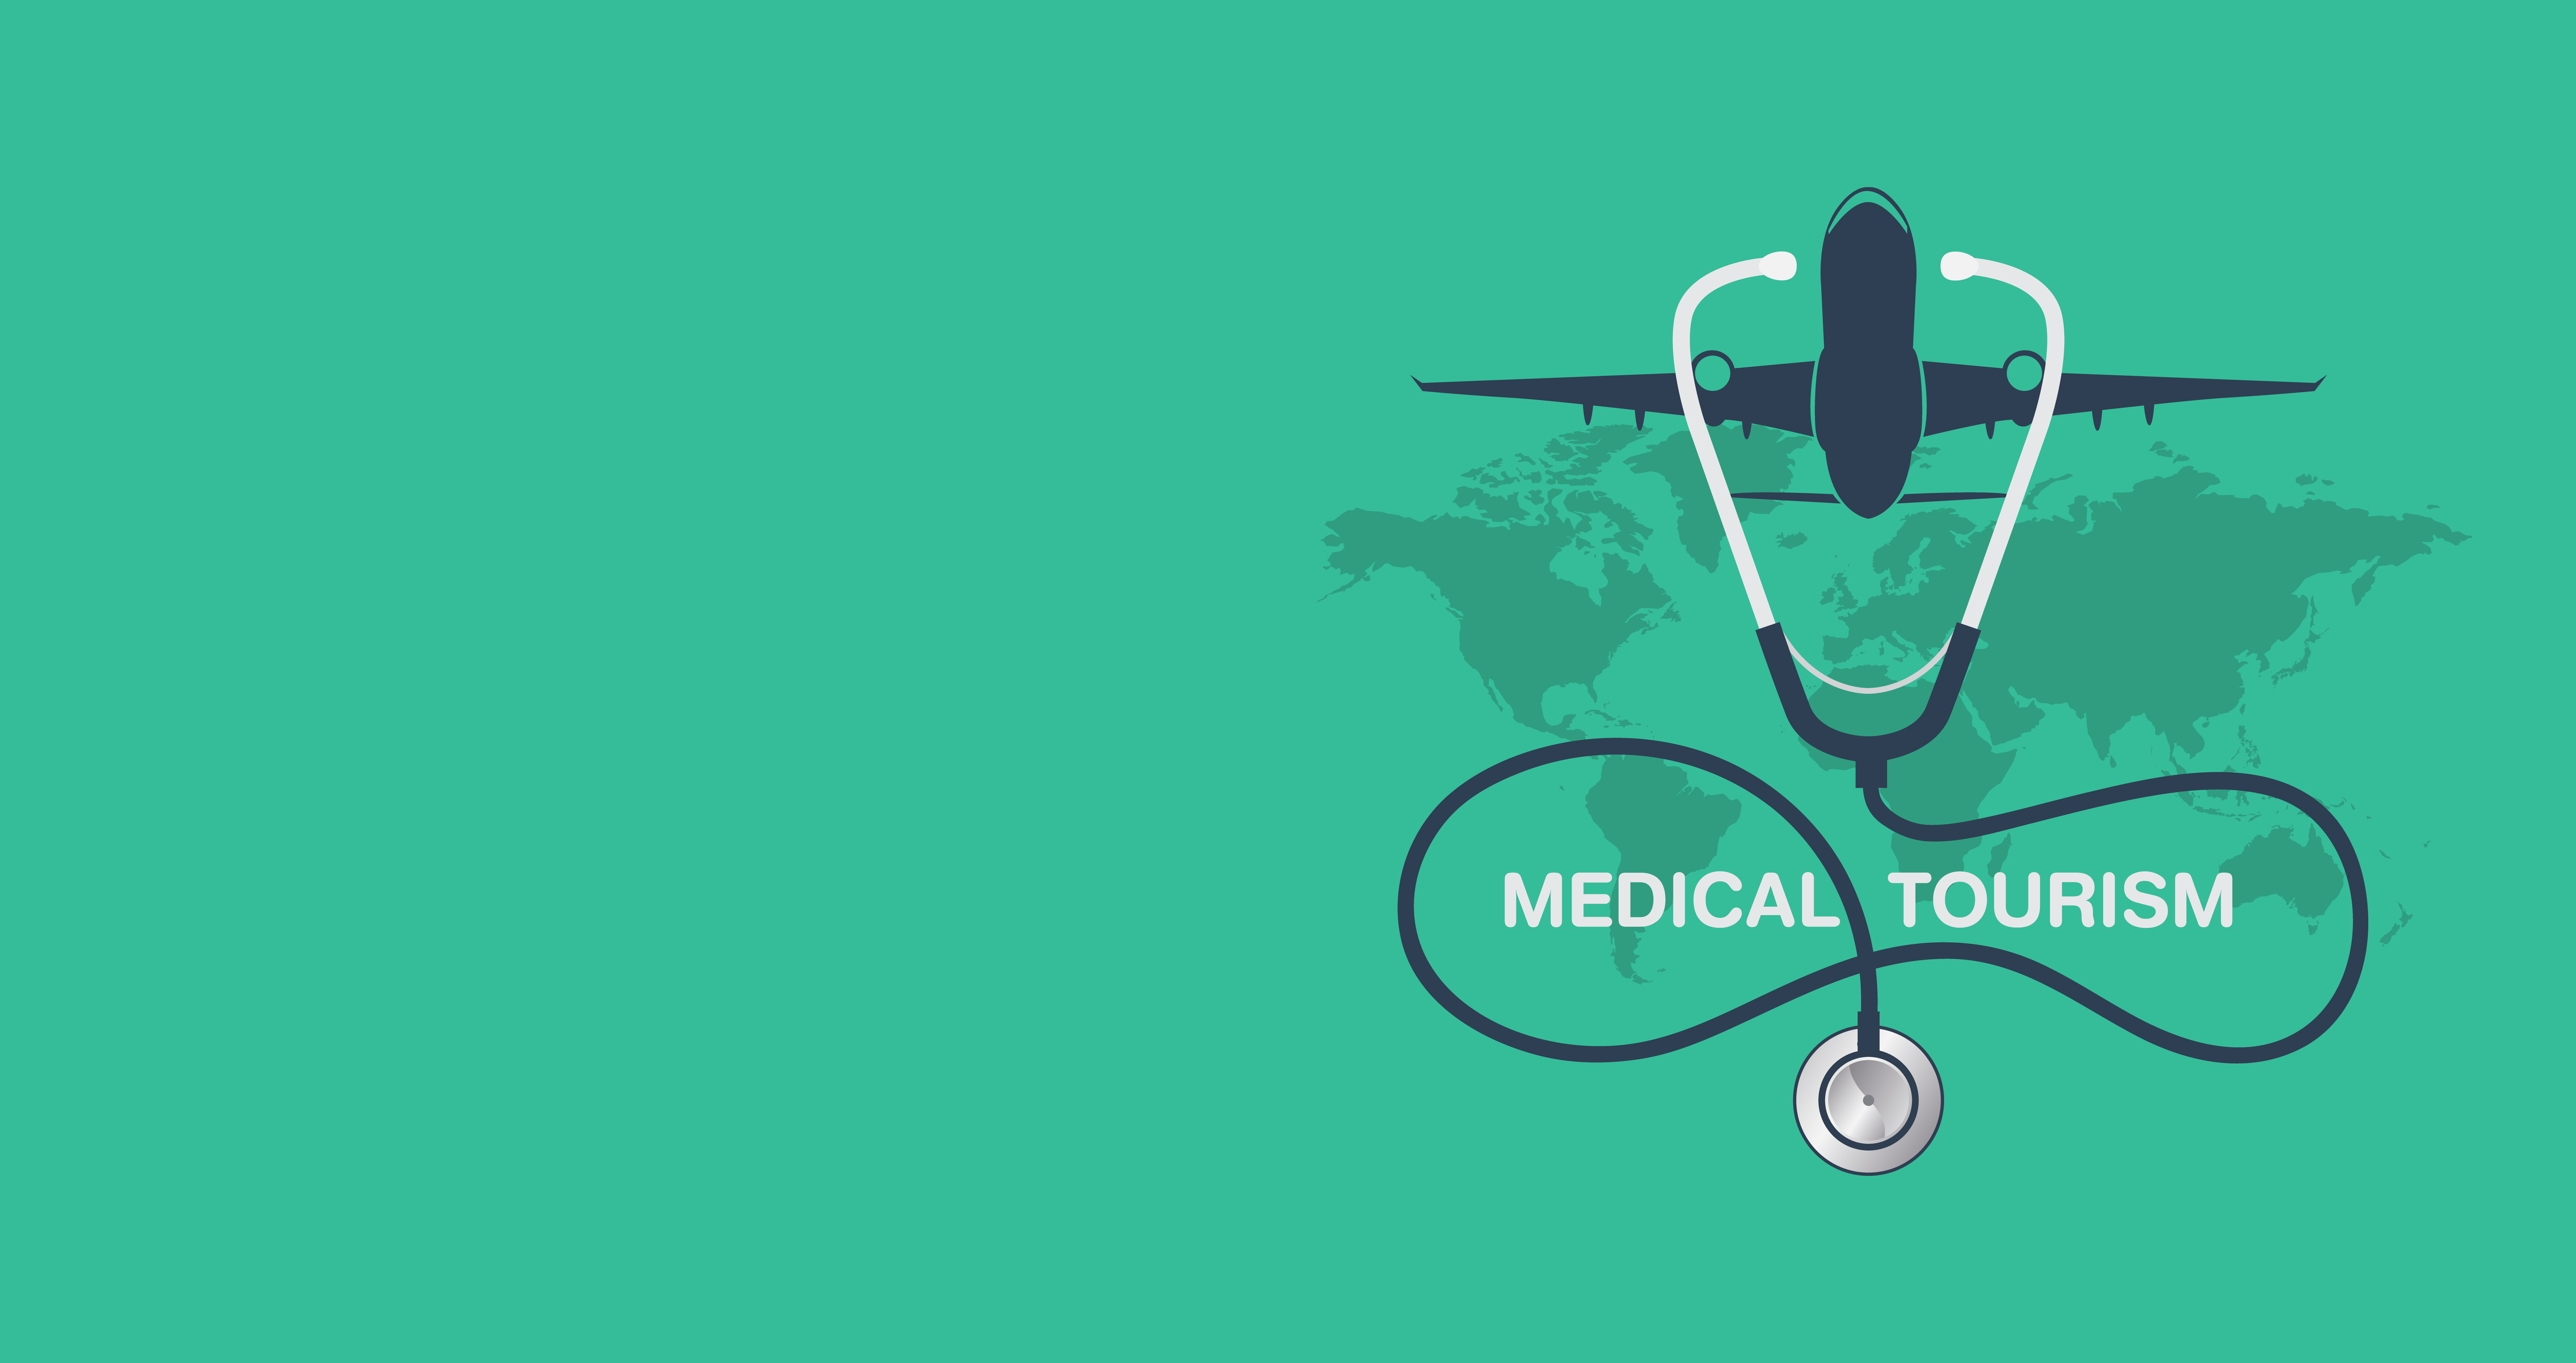 Medical tourism. Медицинский туризм. Medical Tourism медицинский туризм. Медицинский туризм логотип. Медицинский туризм картинки.